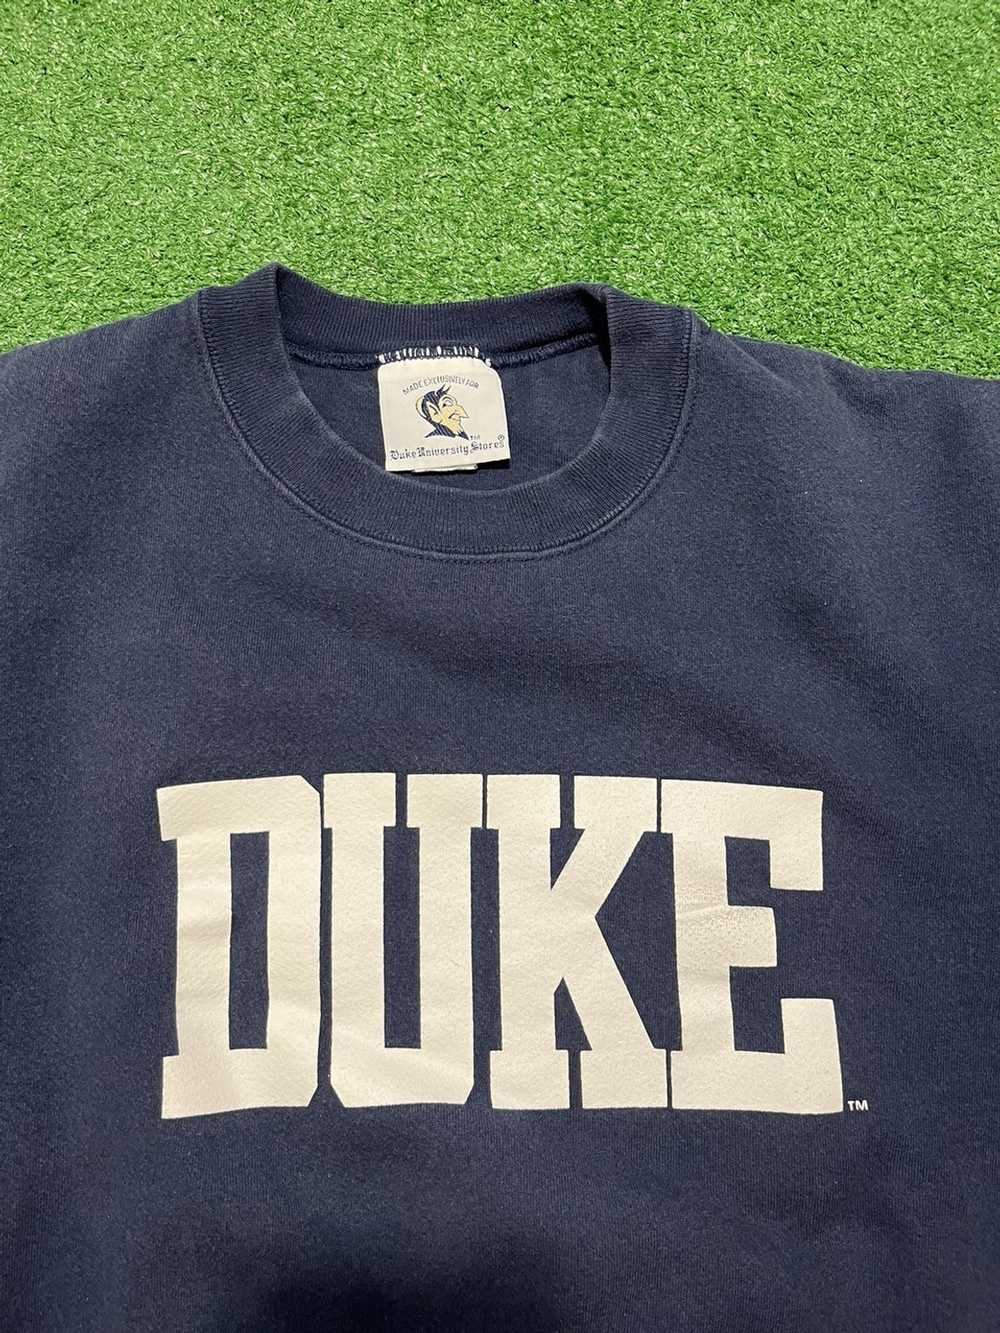 American College × Vintage Vintage Duke sweater - image 2